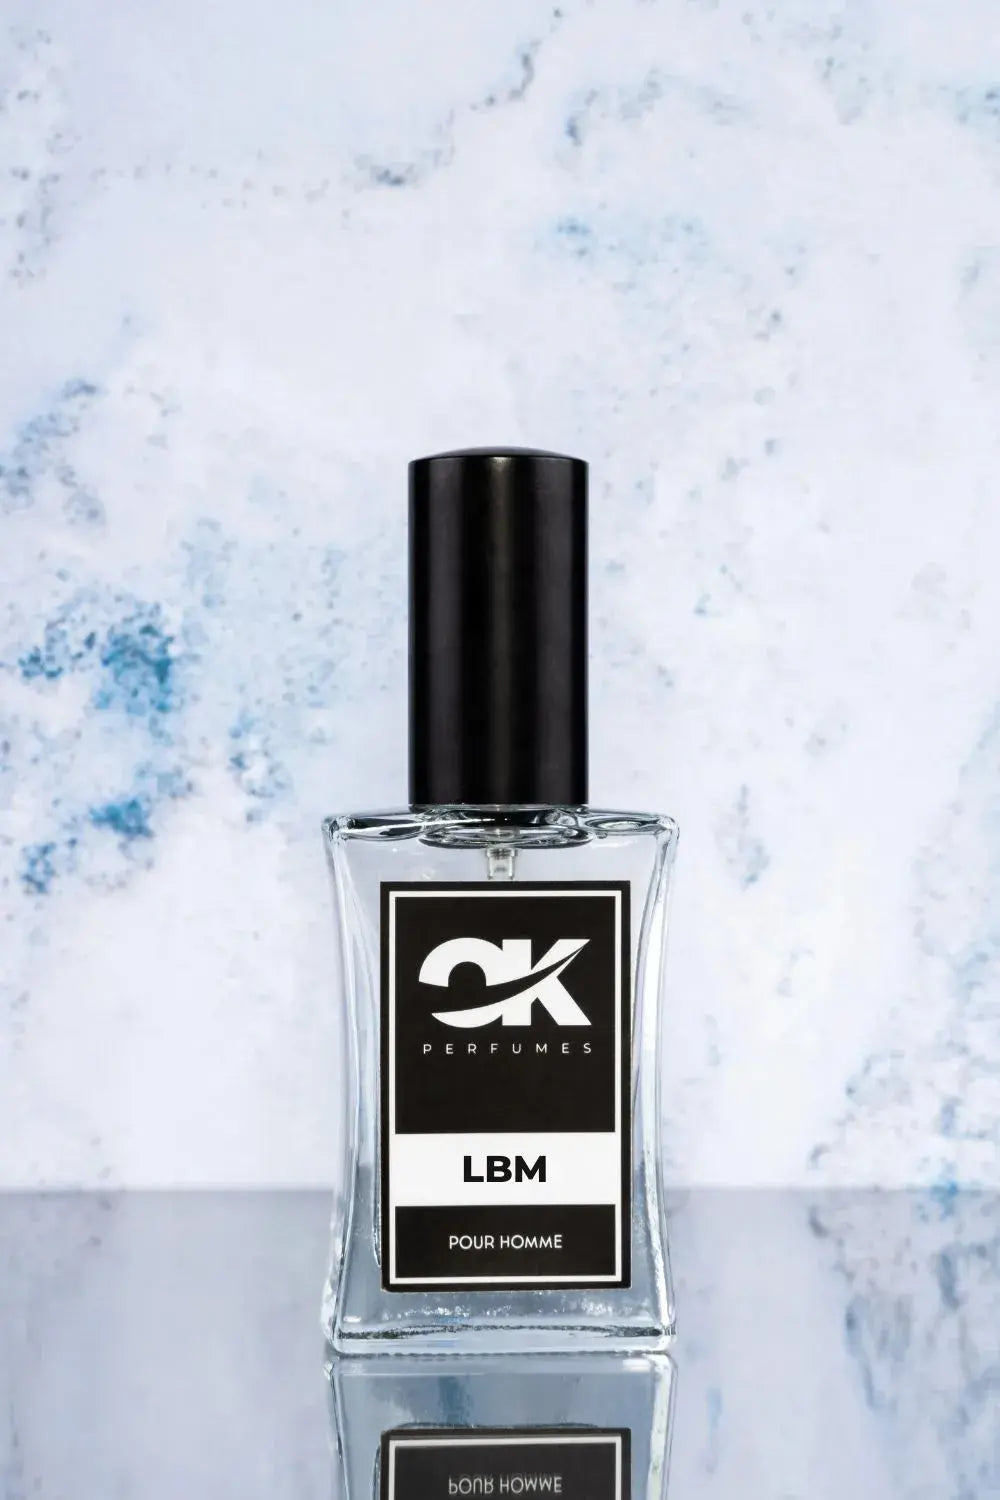 LBM - Recuerda a Light Blue masculino de Dolce&Gabbana